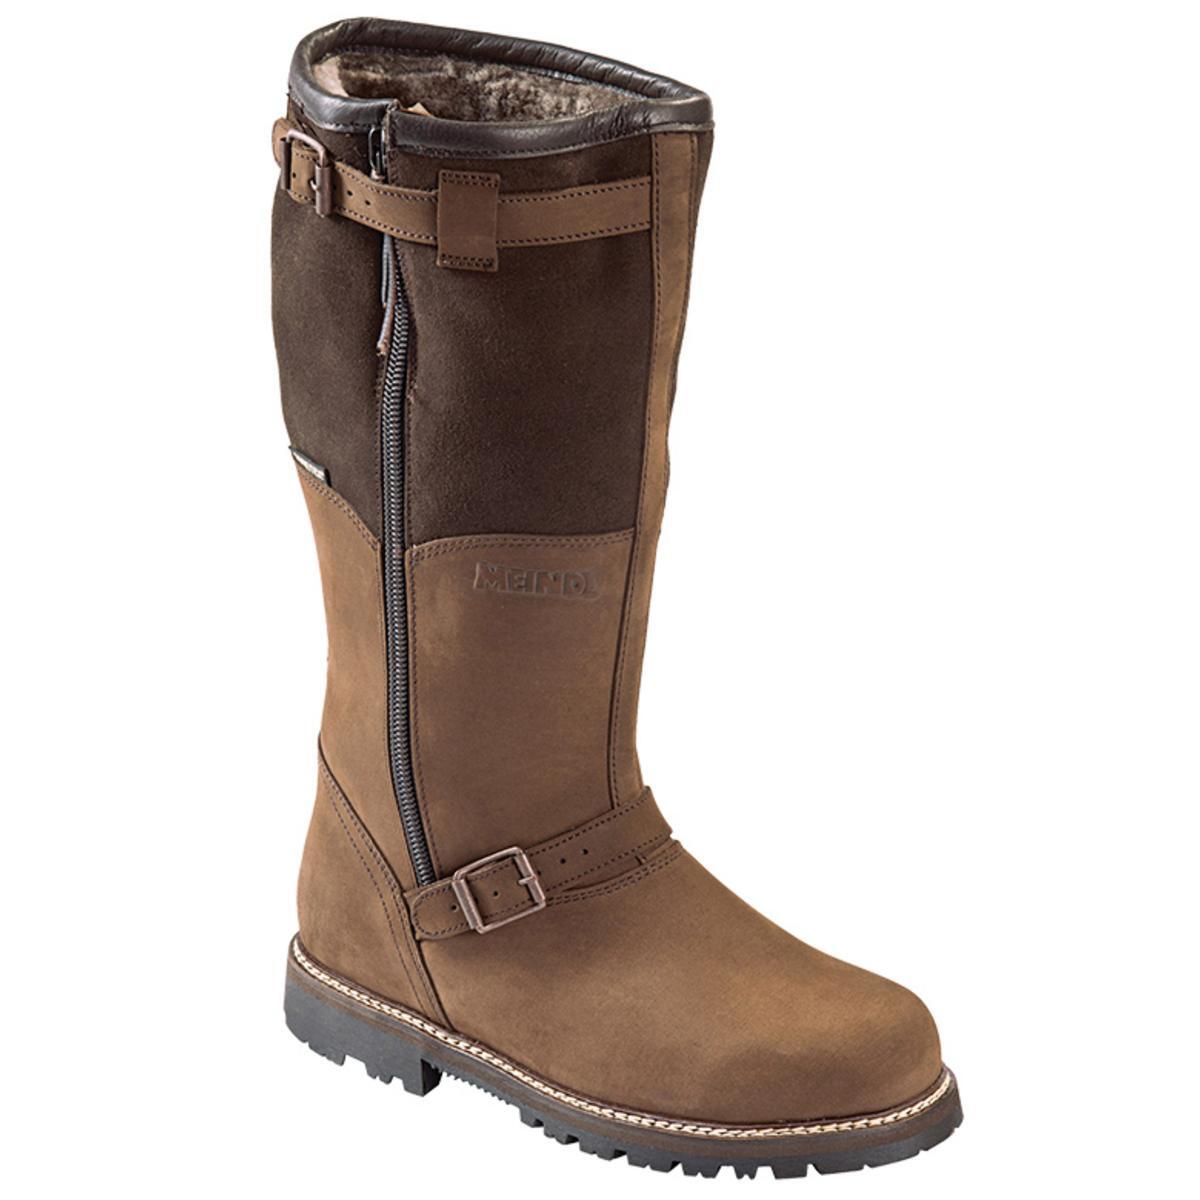 Meindl Kiruna GTX Fleece Lined Winter Boots UK 9 2/3